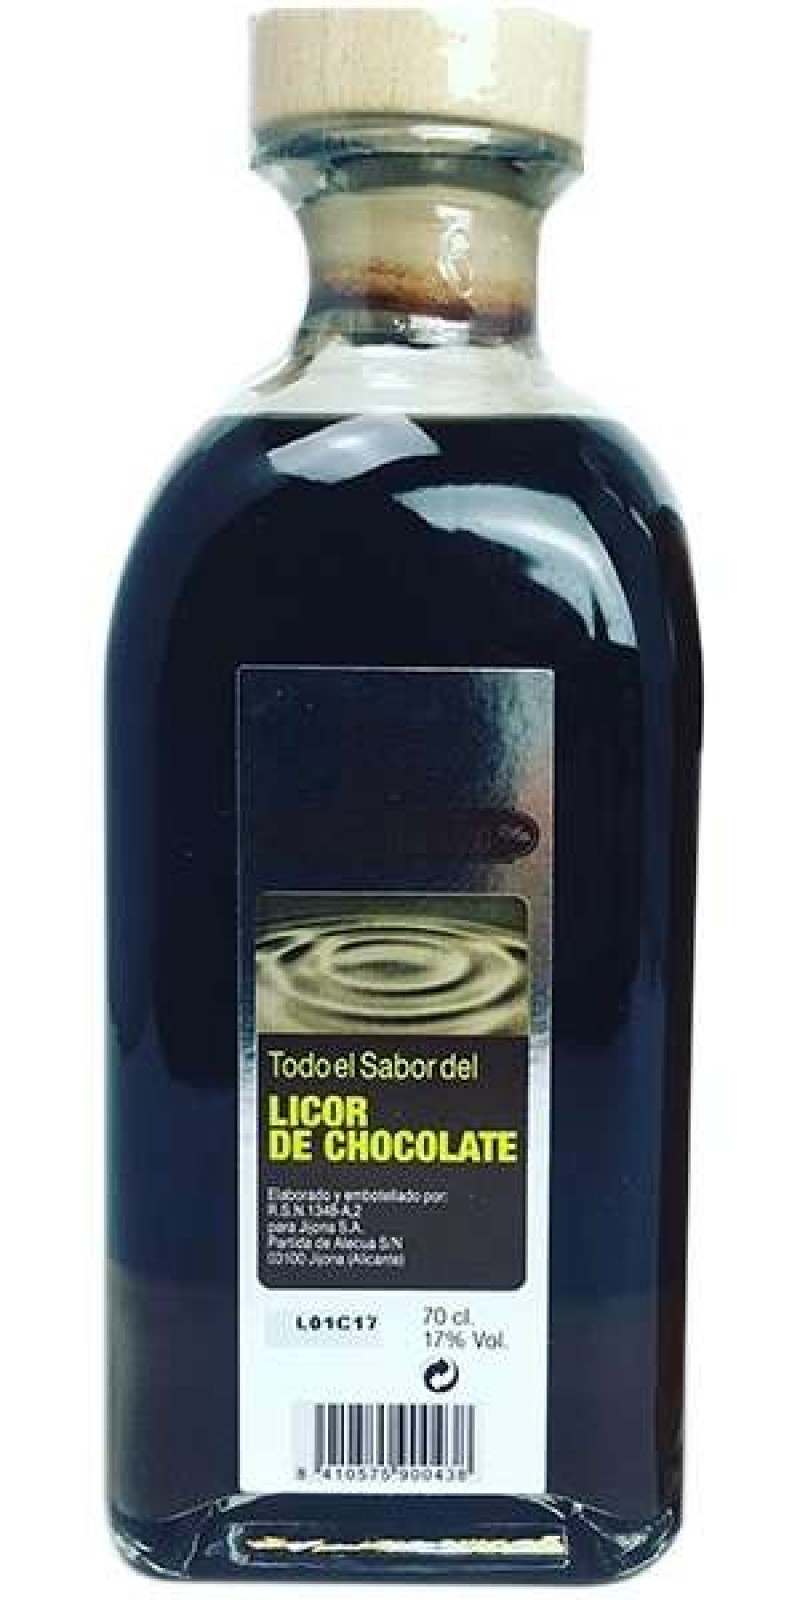 Comprar Licor de Chocolate Online